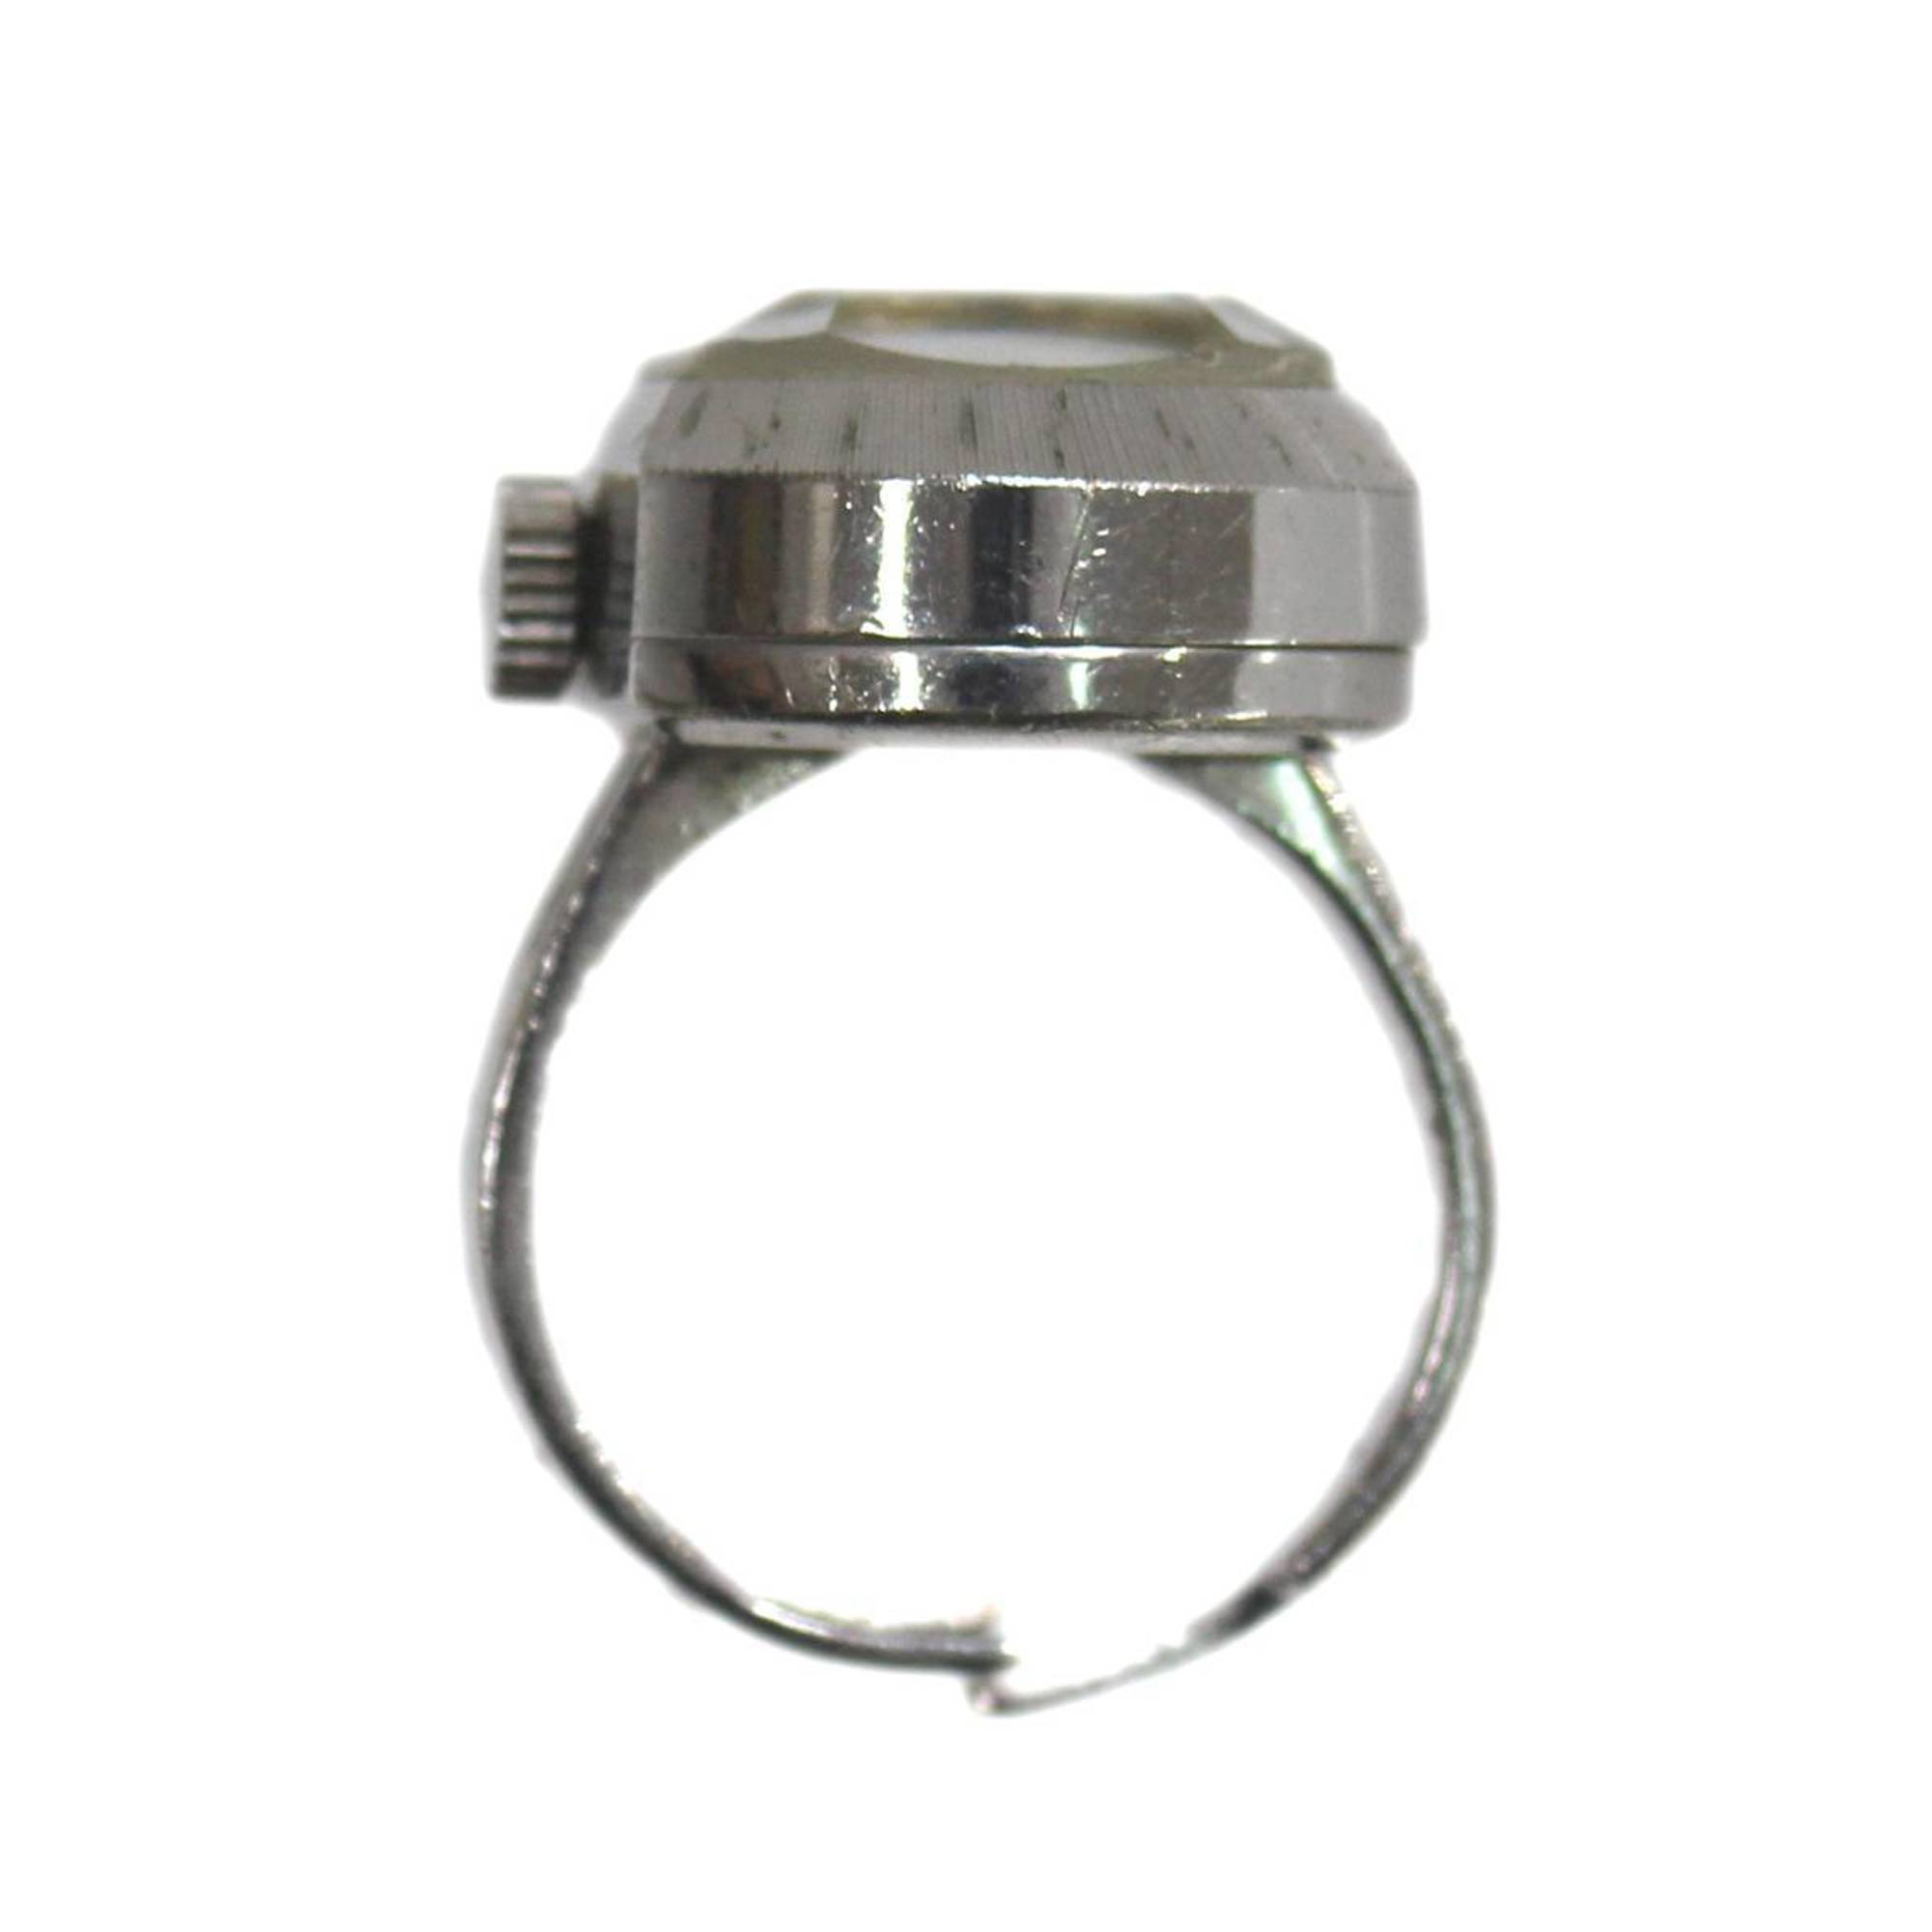 SEIKO Ring Watch 17 Jewels Manual Winding AWGP Silver x Blue 11-7750